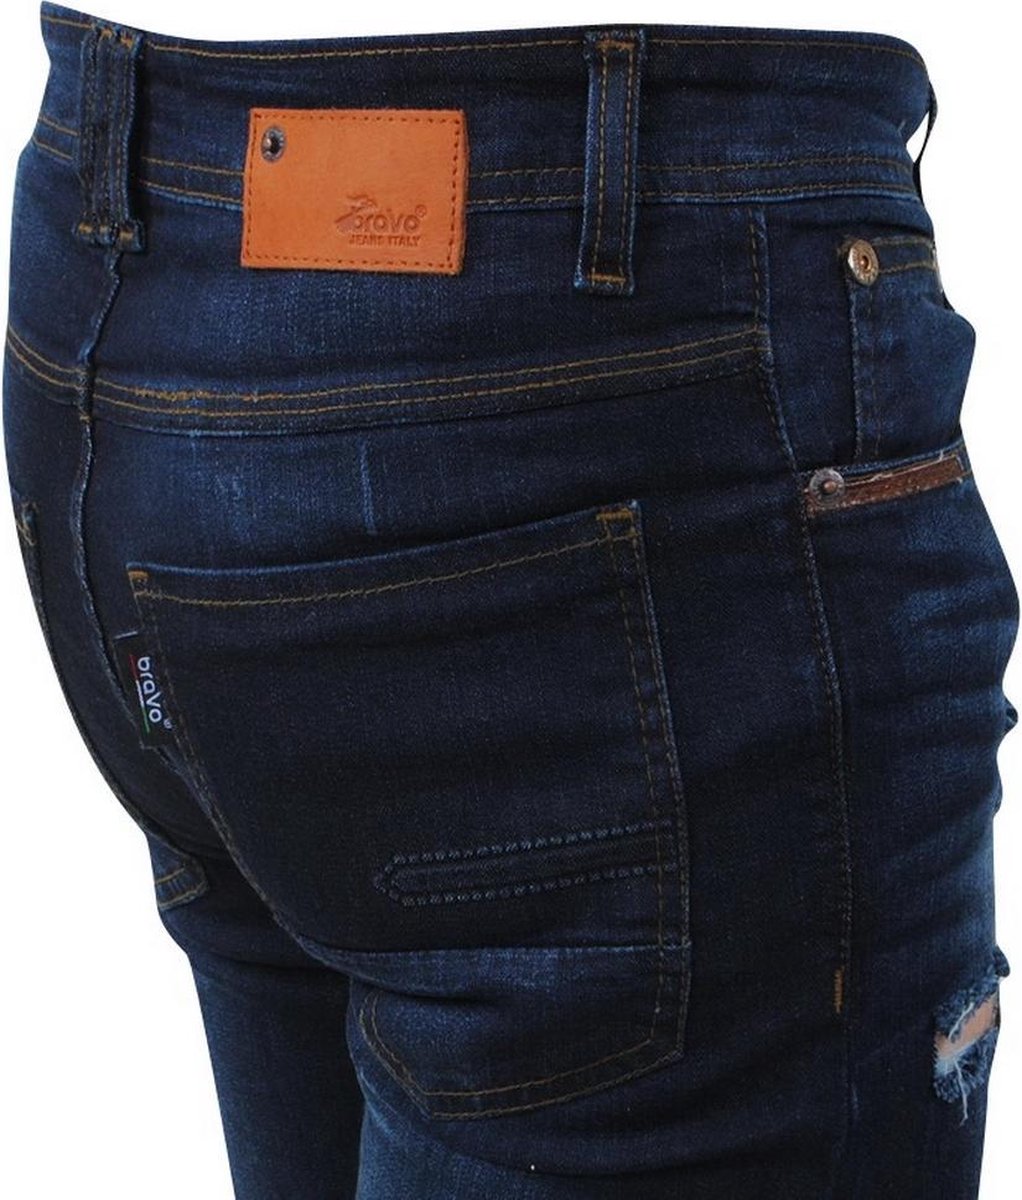 Bravo Jeans - Heren Jeans - Damaged Look - Slim Fit - Stretch - Lengte 32 -  Donker Blauw | bol.com